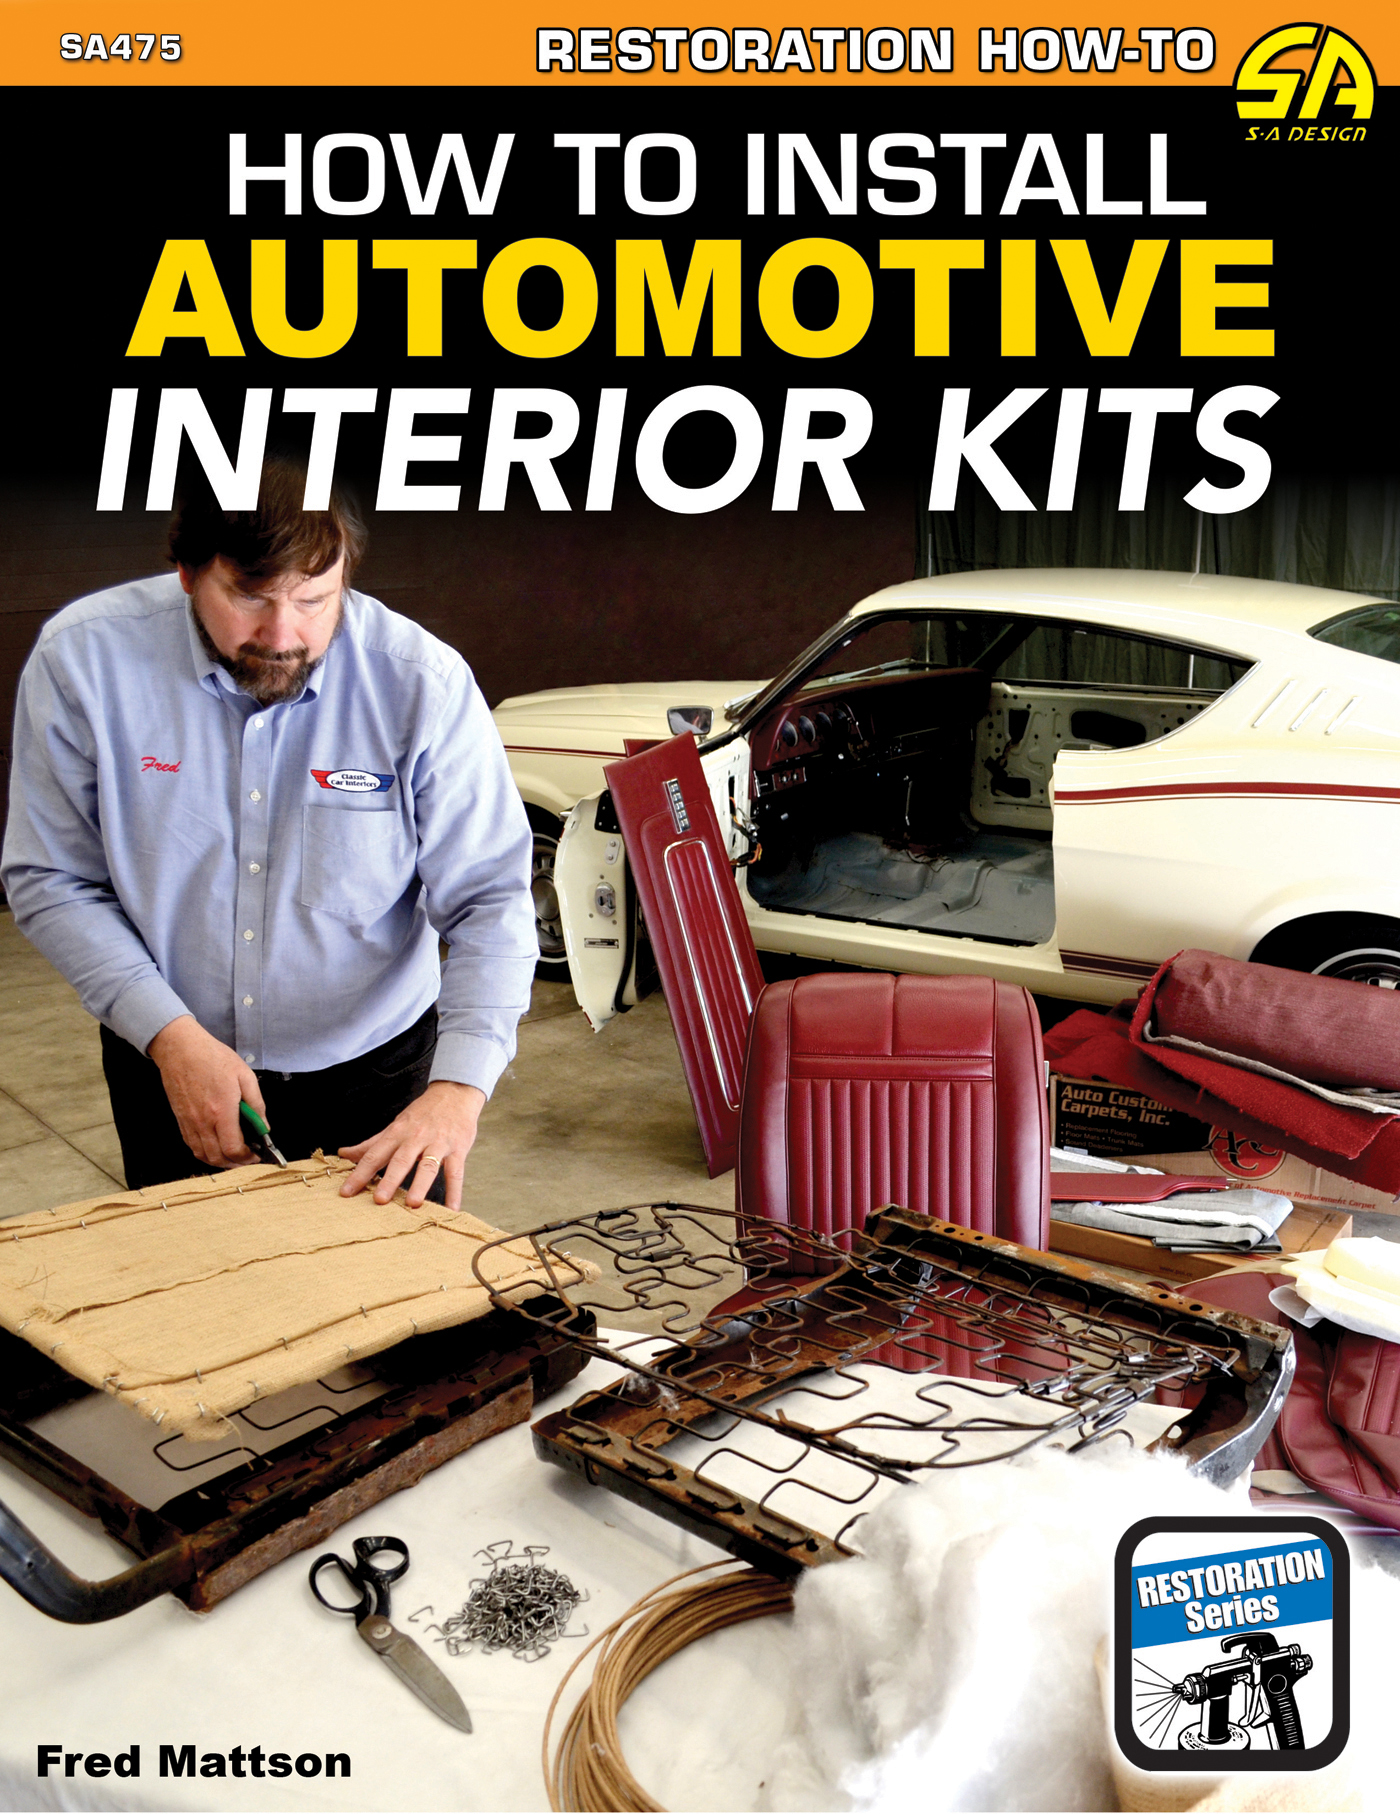 How to Install Automotive Interior Kits - image 1